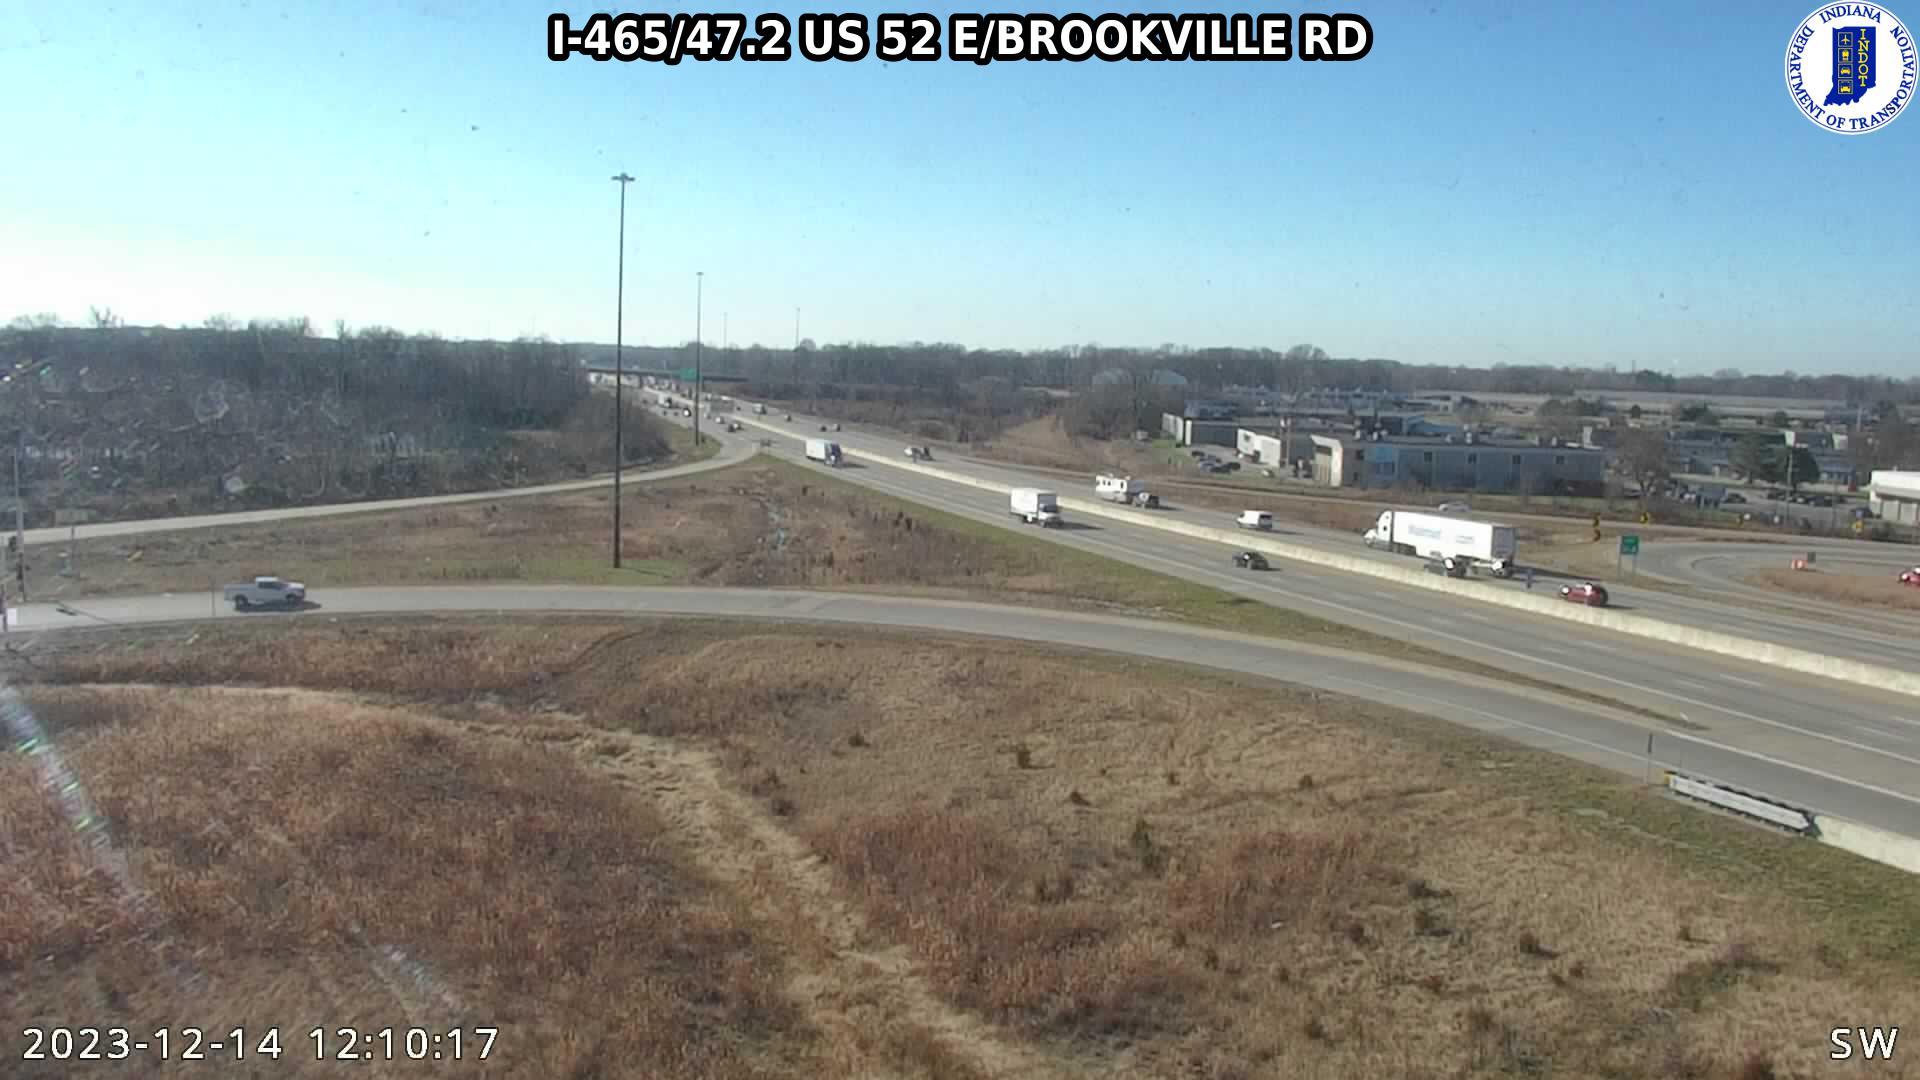 Traffic Cam Indianapolis: I-465: I-465/47.2 US 52 E/BROOKVILLE RD Player